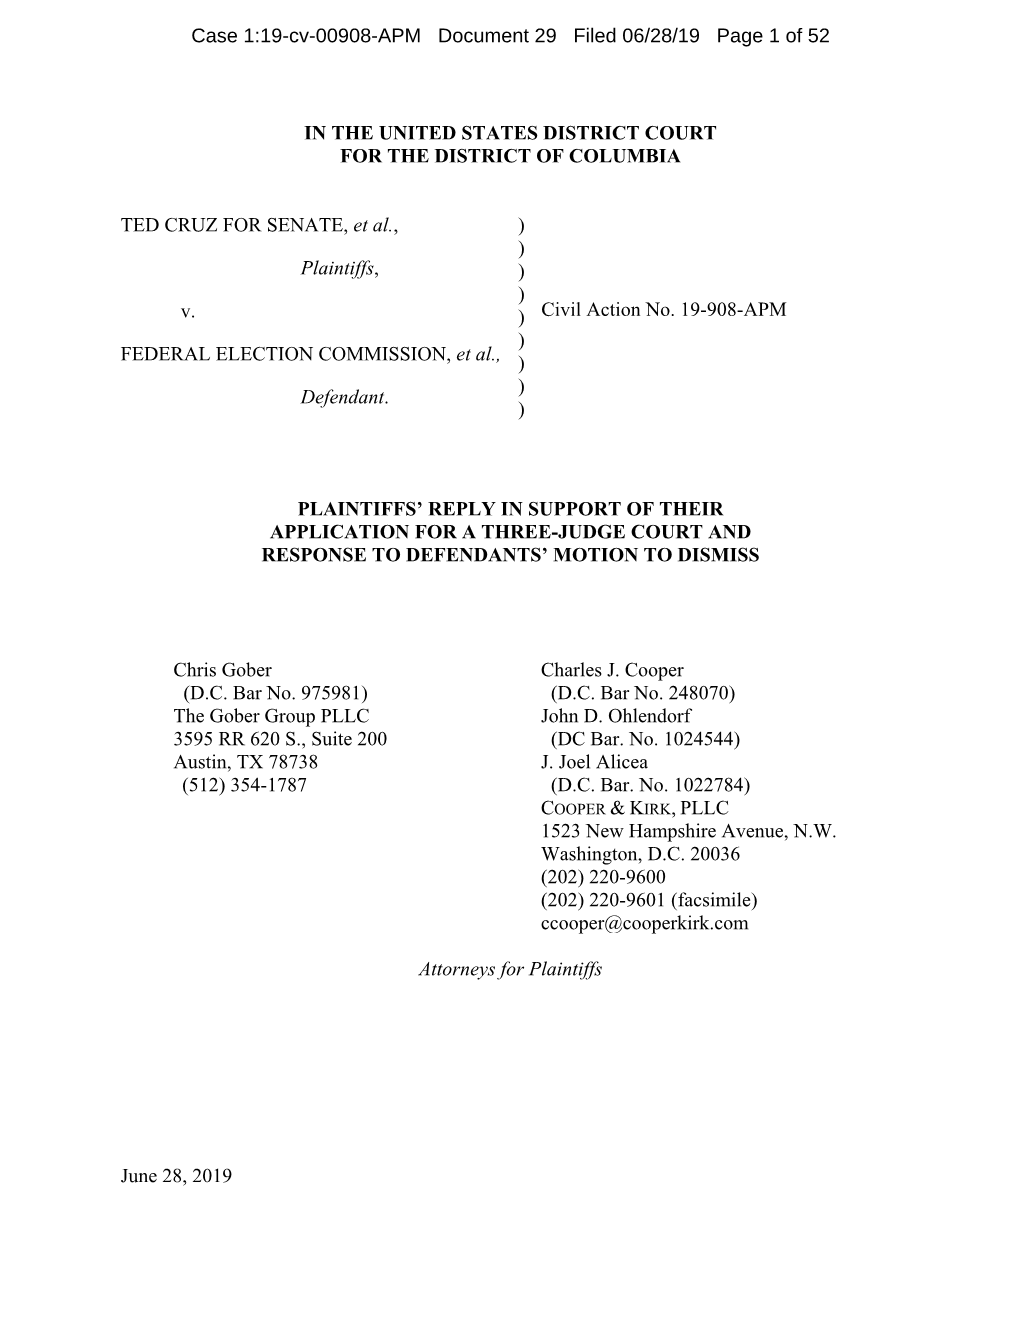 Cruz V. FEC (19-0908) Plaintiffs' Reply in Support of Their Application for 3